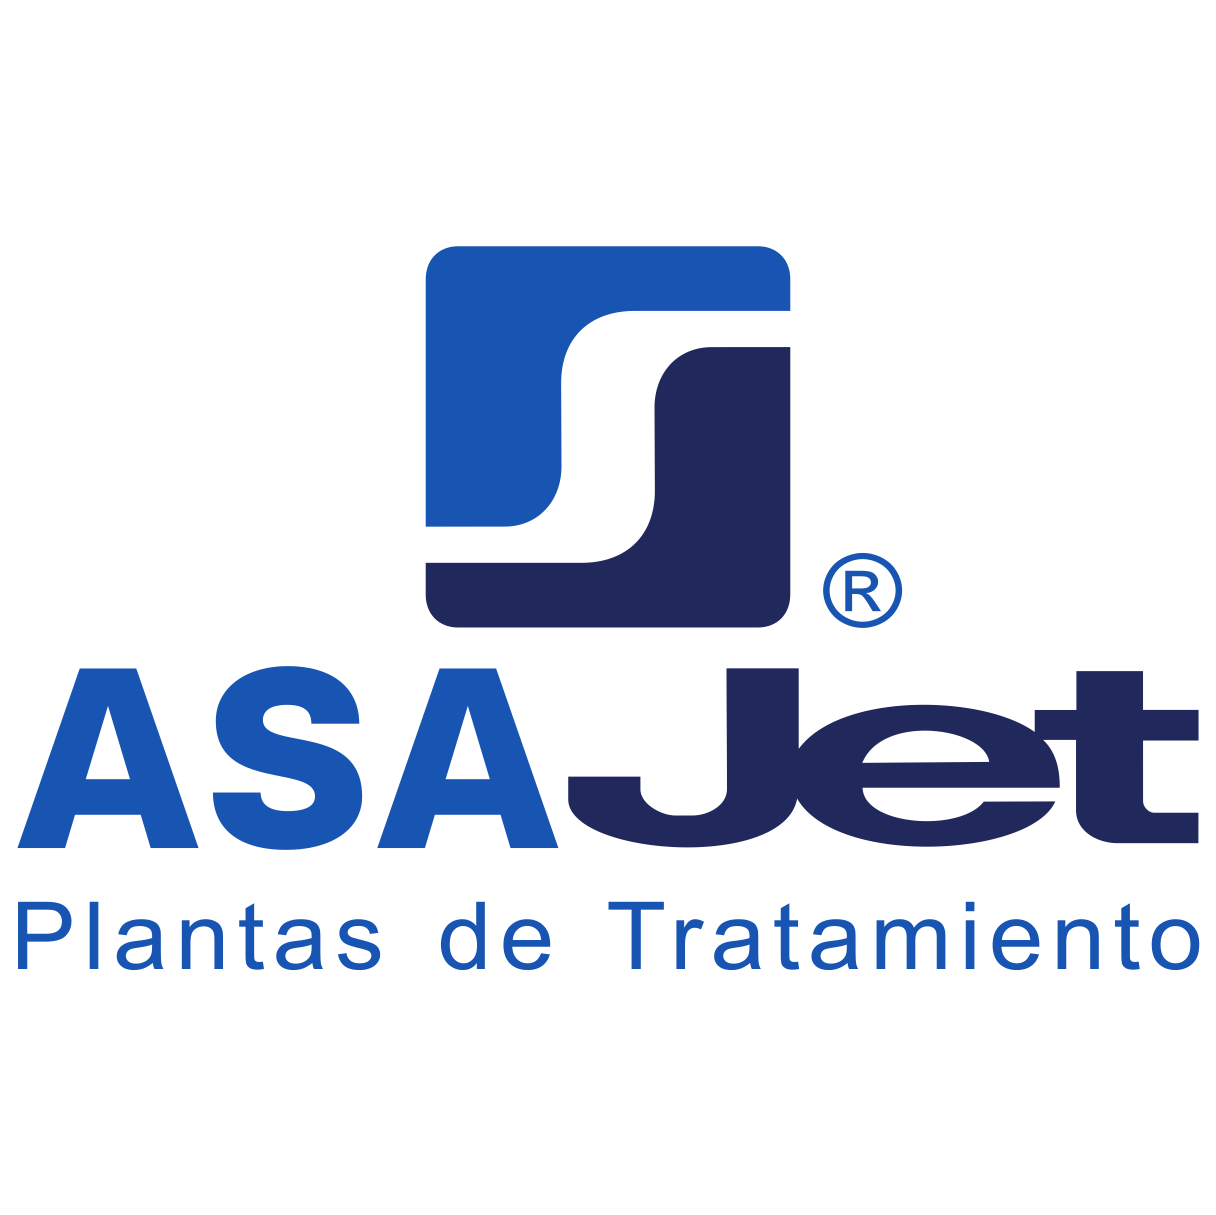 plantas-de-tratamiento-asajet-logo-2019